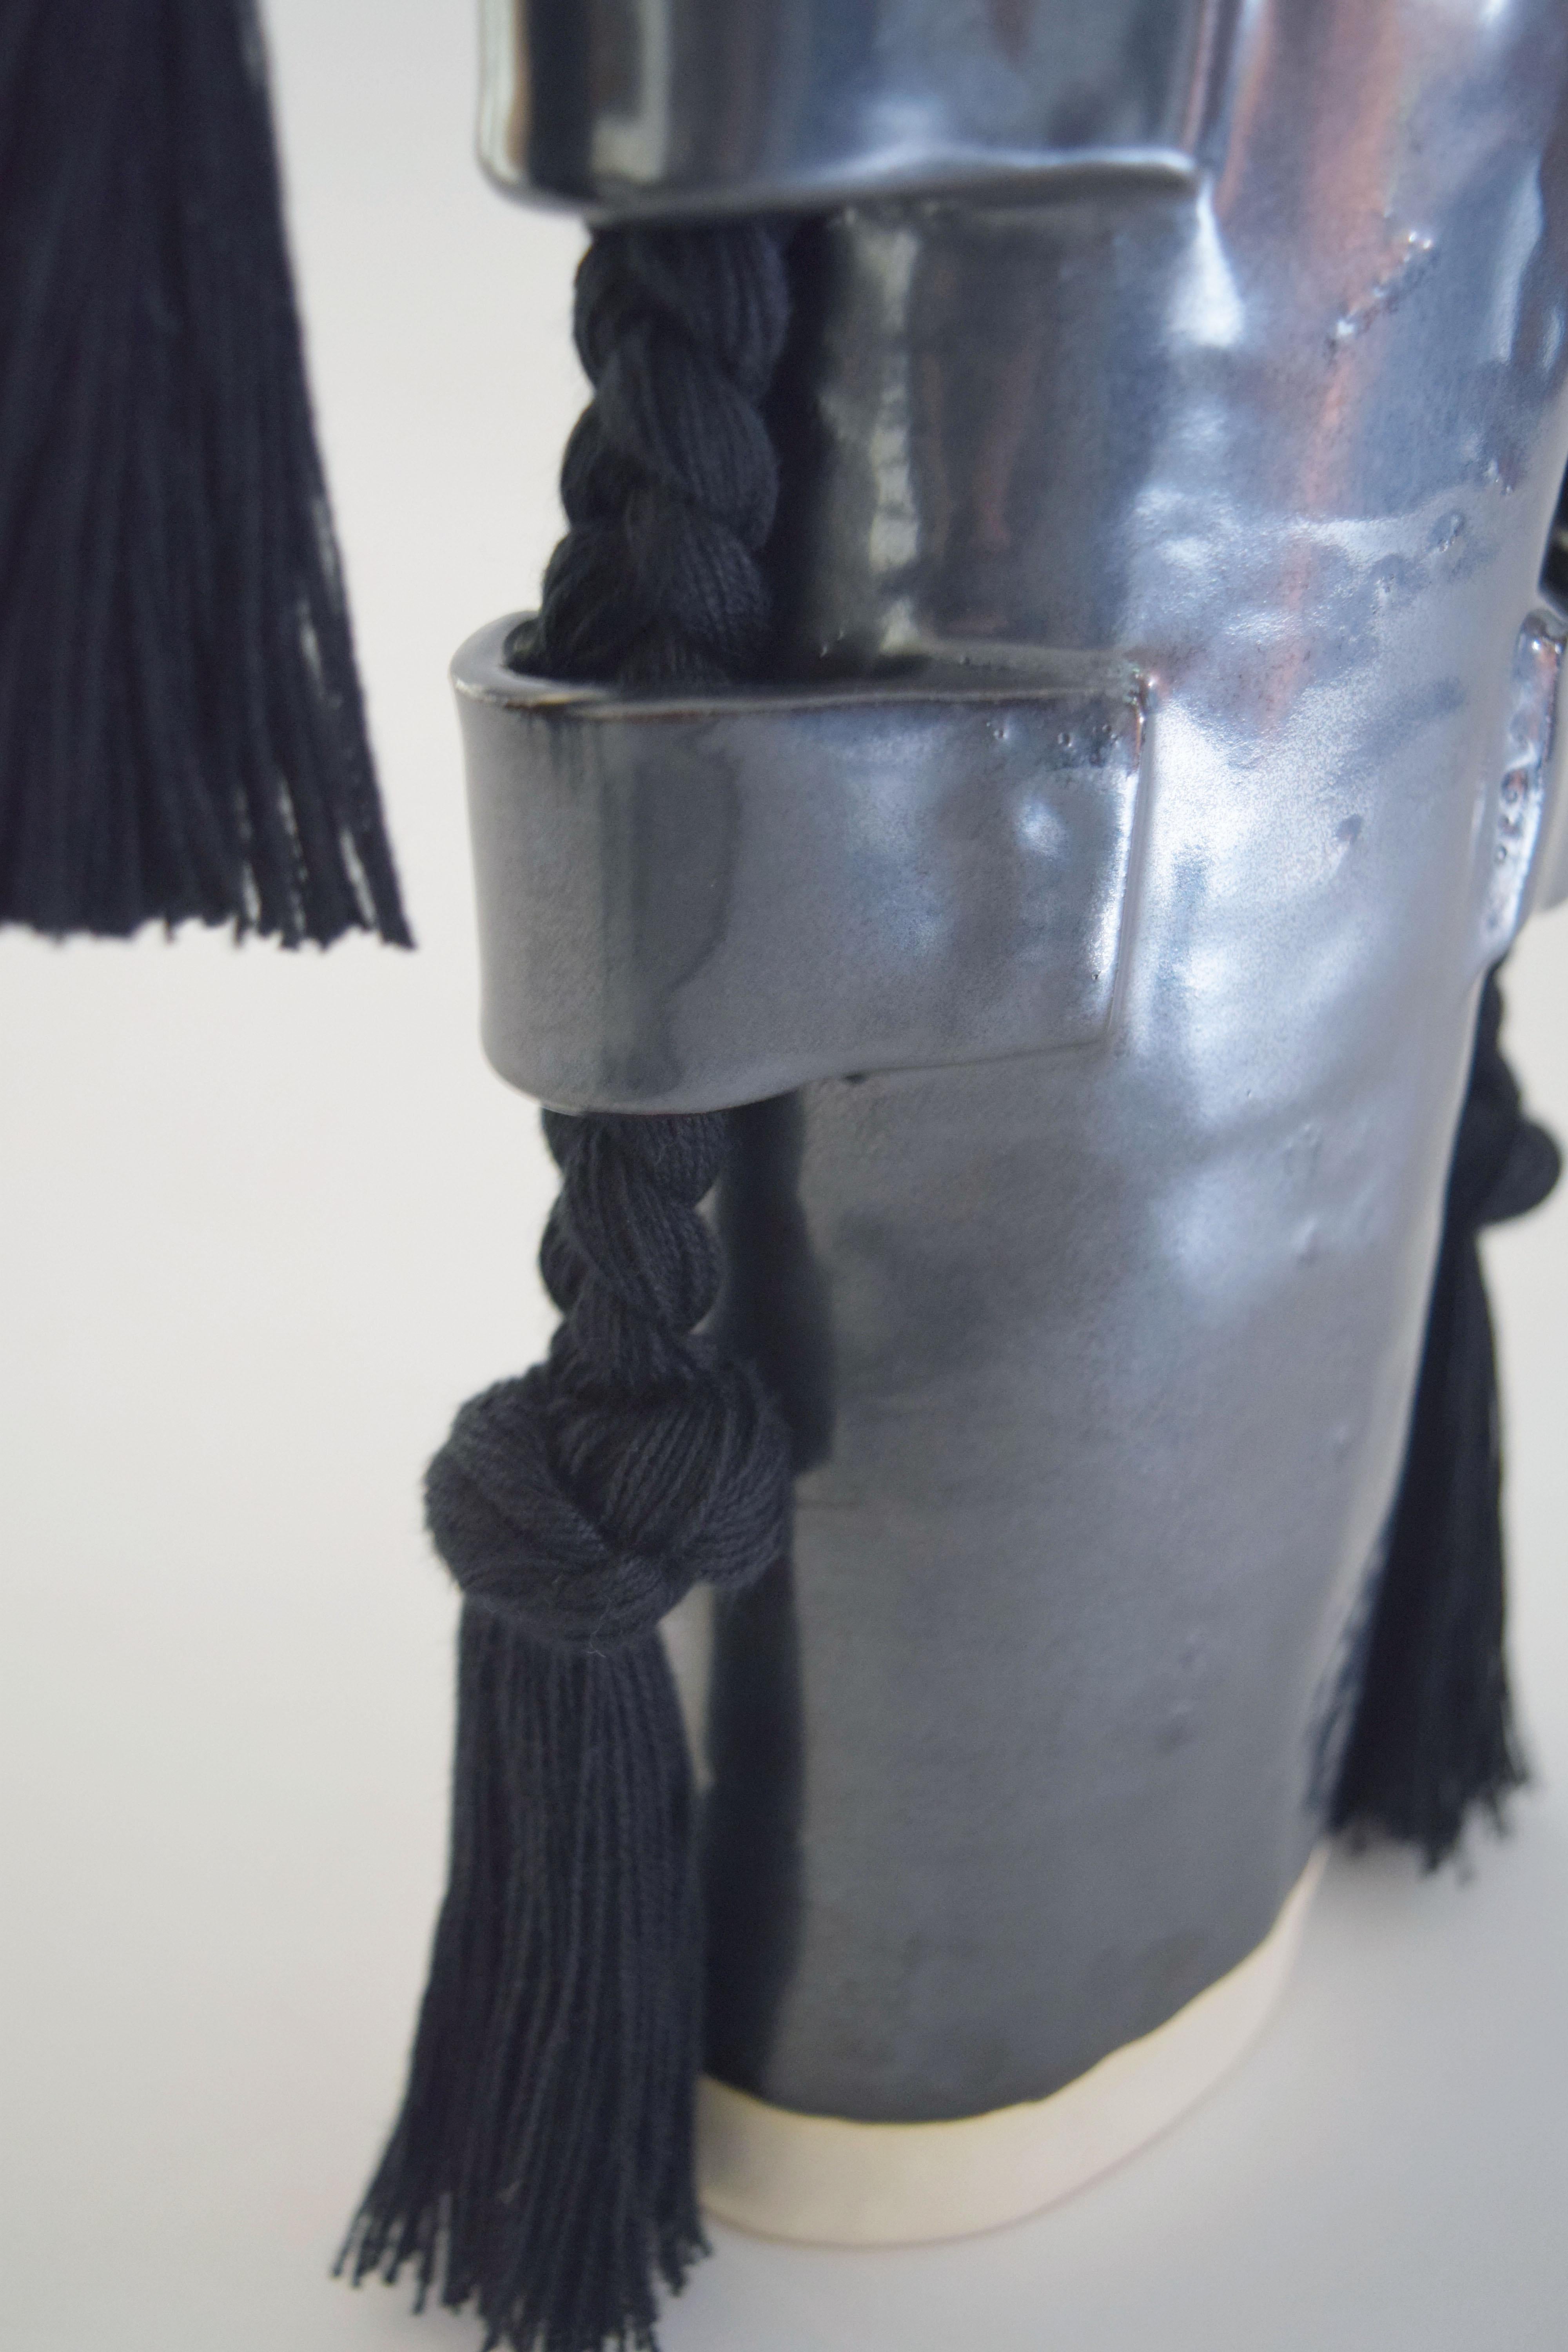 American Handmade Vase #504 in Black with Black Cotton Fringe